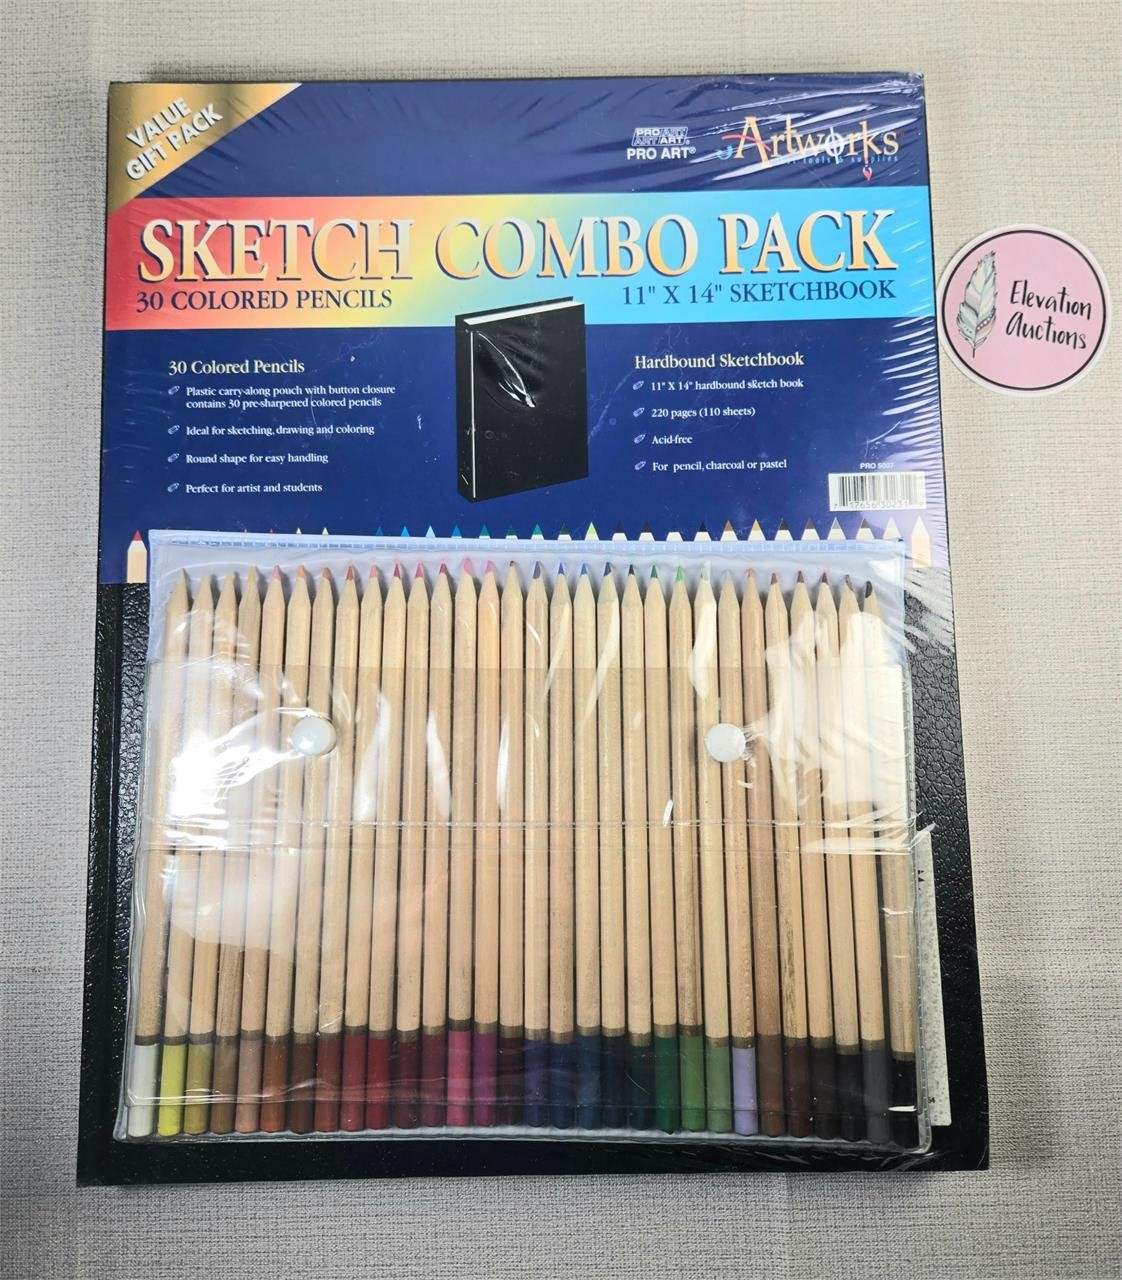 Sketch Combo Pack Book Pencils